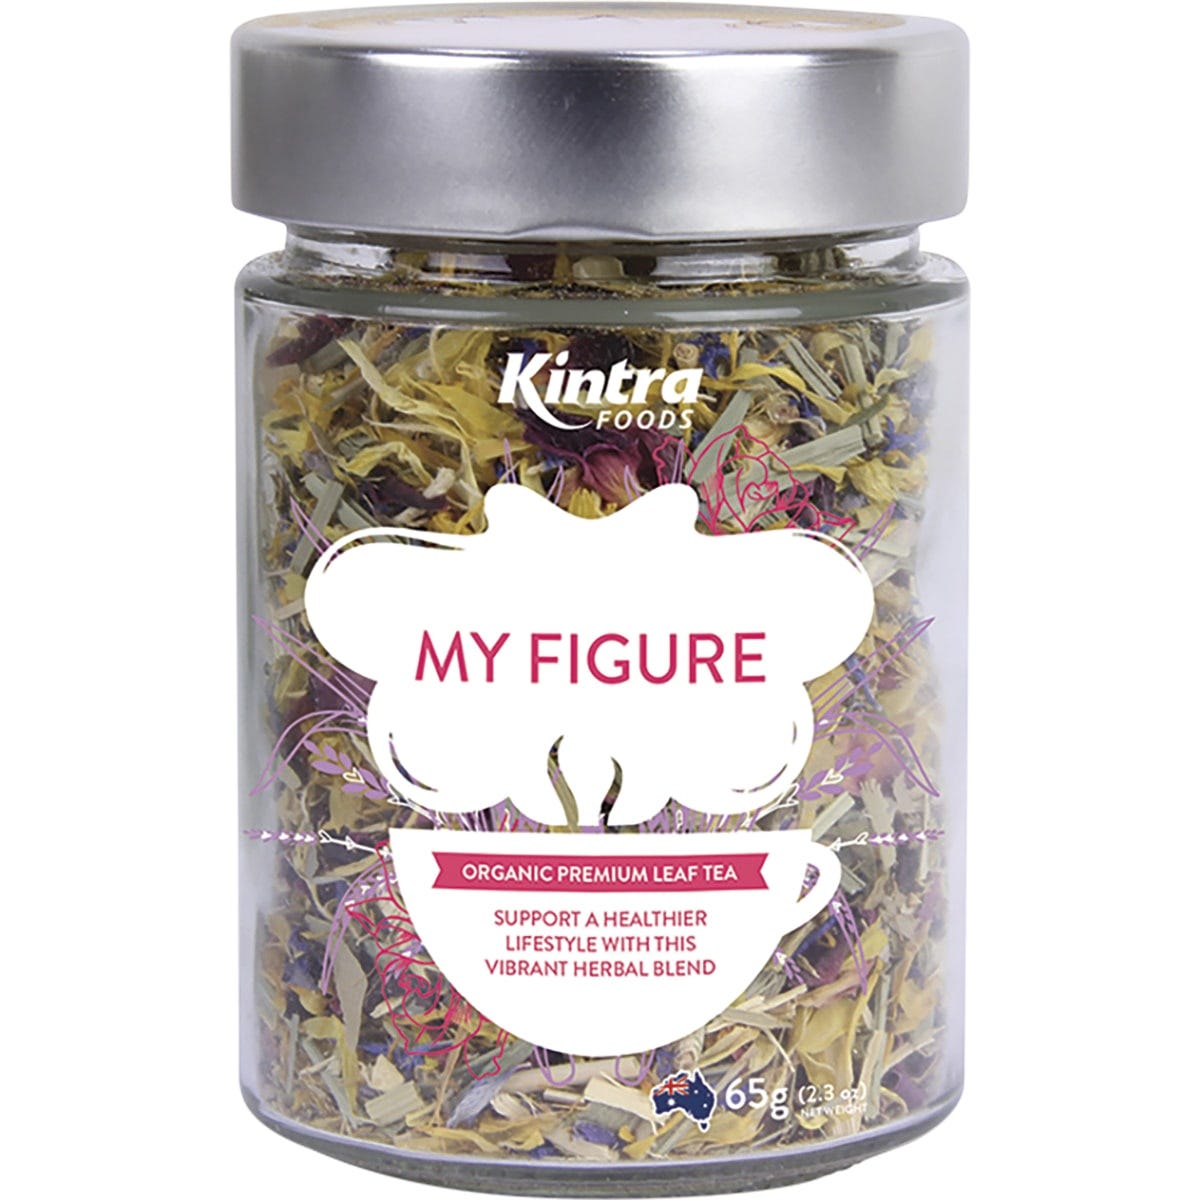 Kintra Foods Loose Leaf Tea My Figure 65g - Dr Earth - Drinks, Weight Management